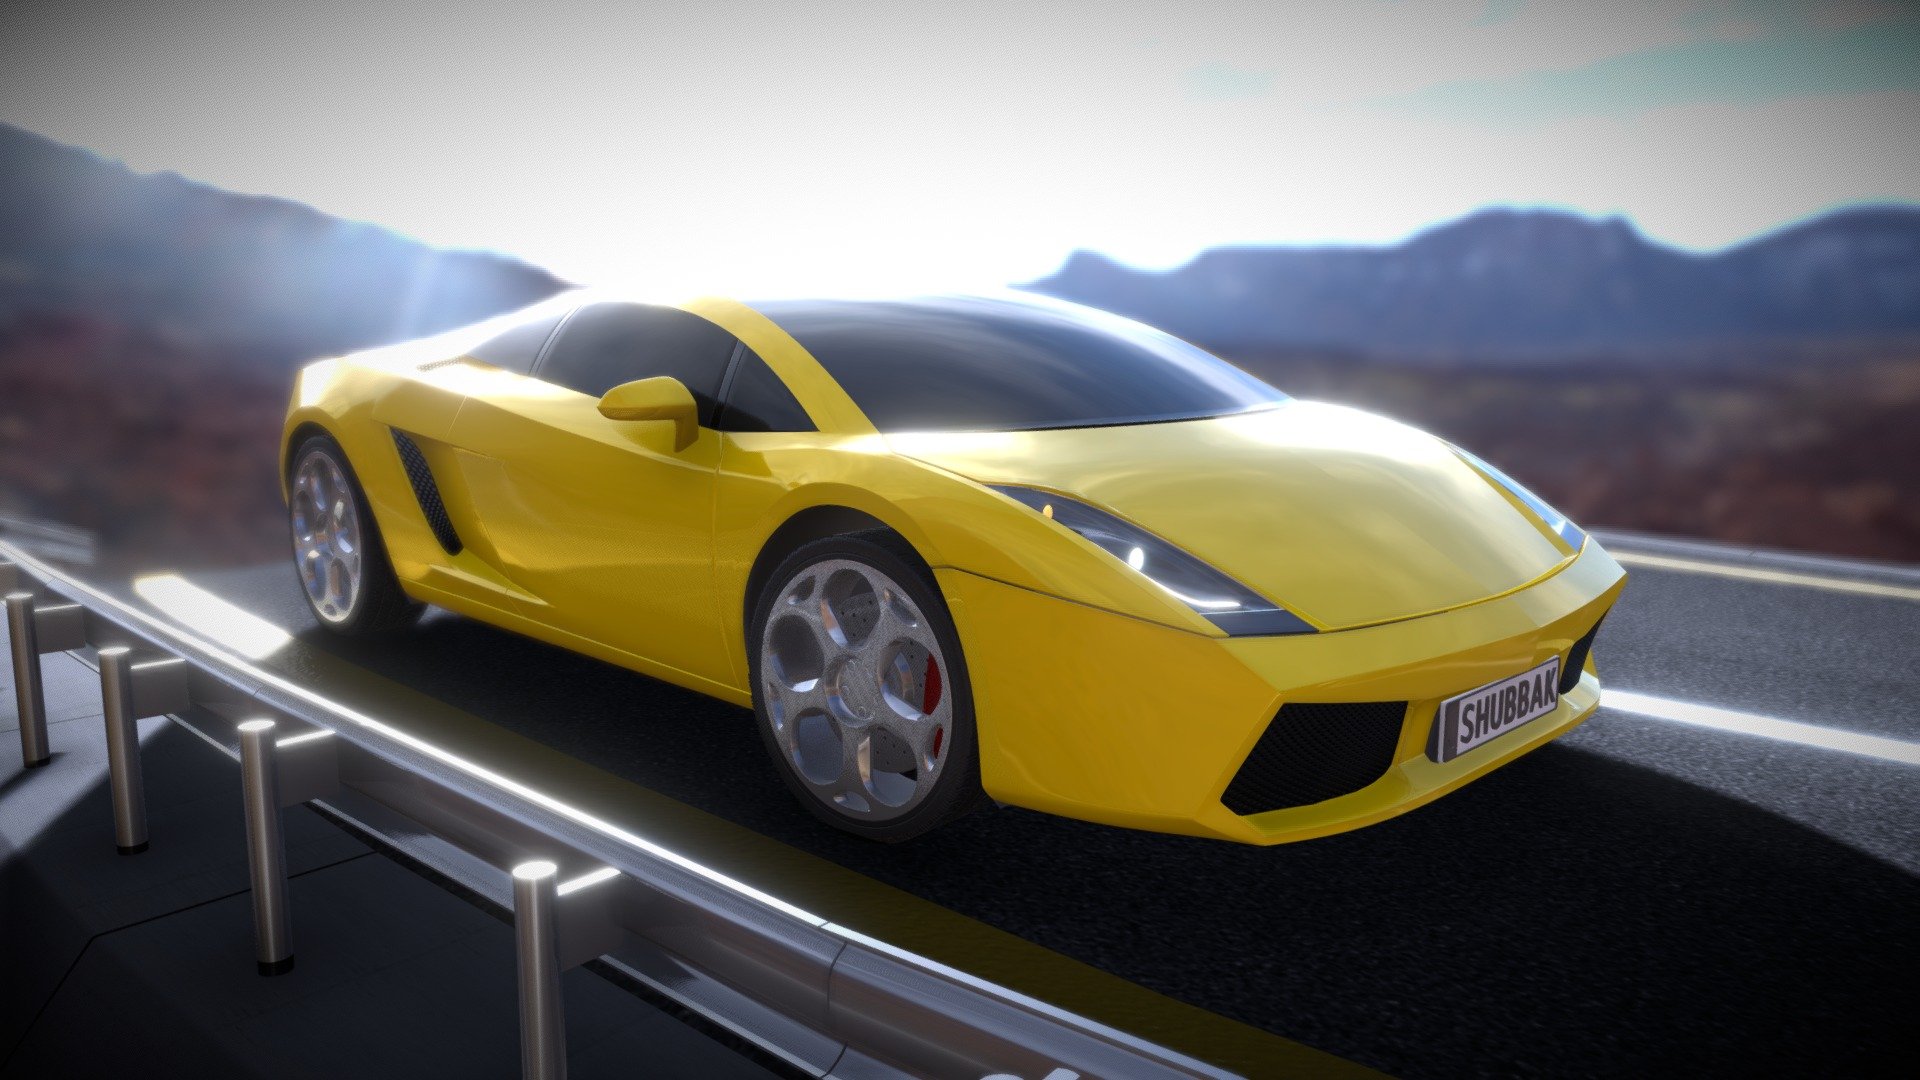 Modeling in 3ds max 2012.
(Polys: 474552) (Verts: 511613) - Lamborghini Gallardo 2005 - 3D model by SHUBBAK3D 3d model